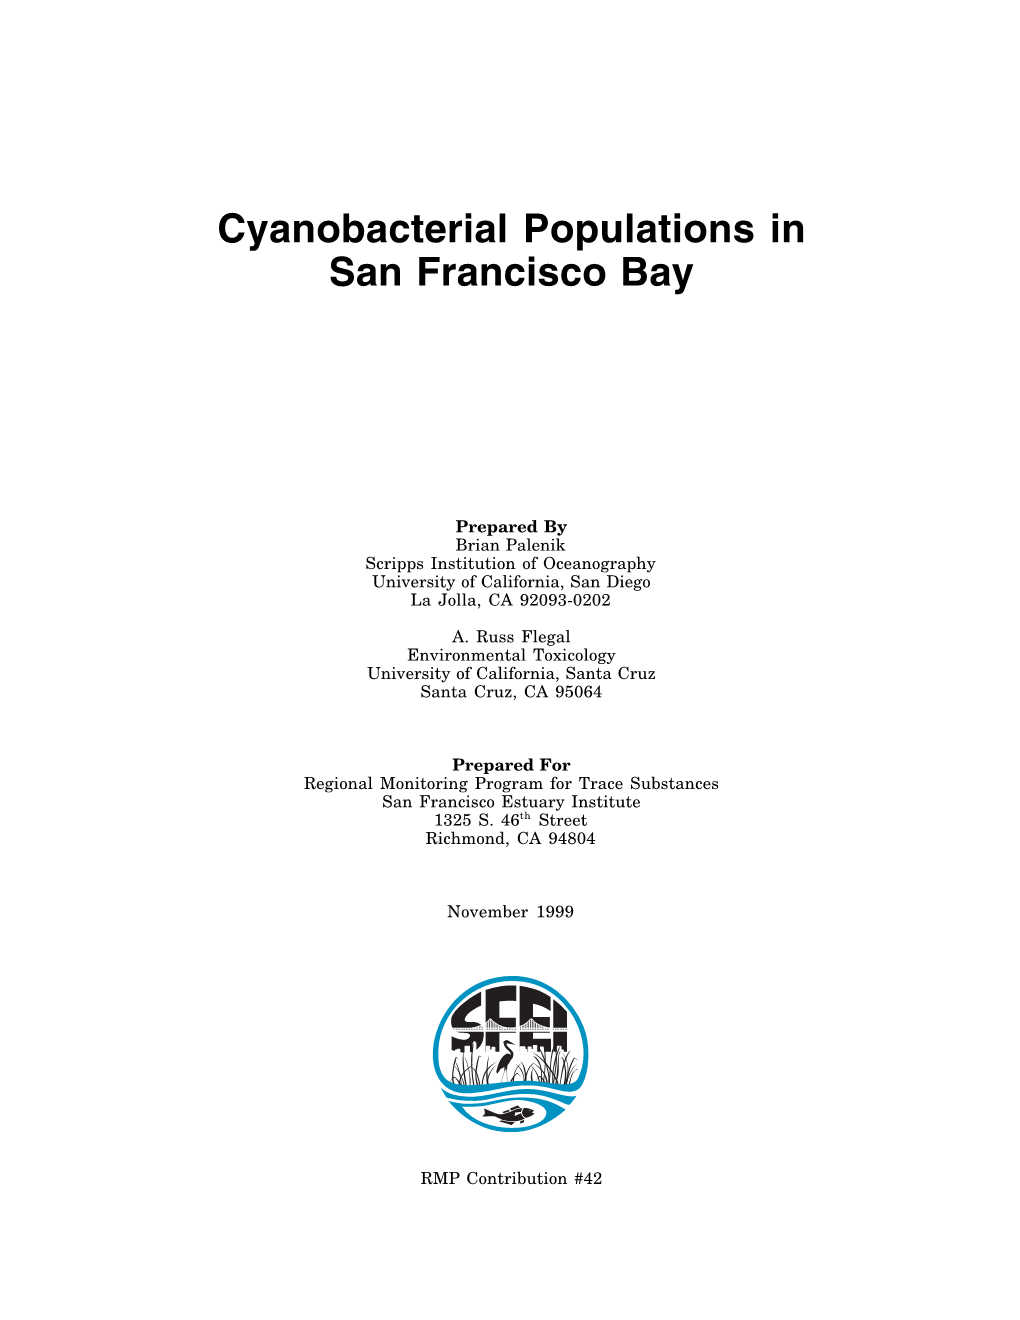 Cyanobacterial Populations in San Francisco Bay